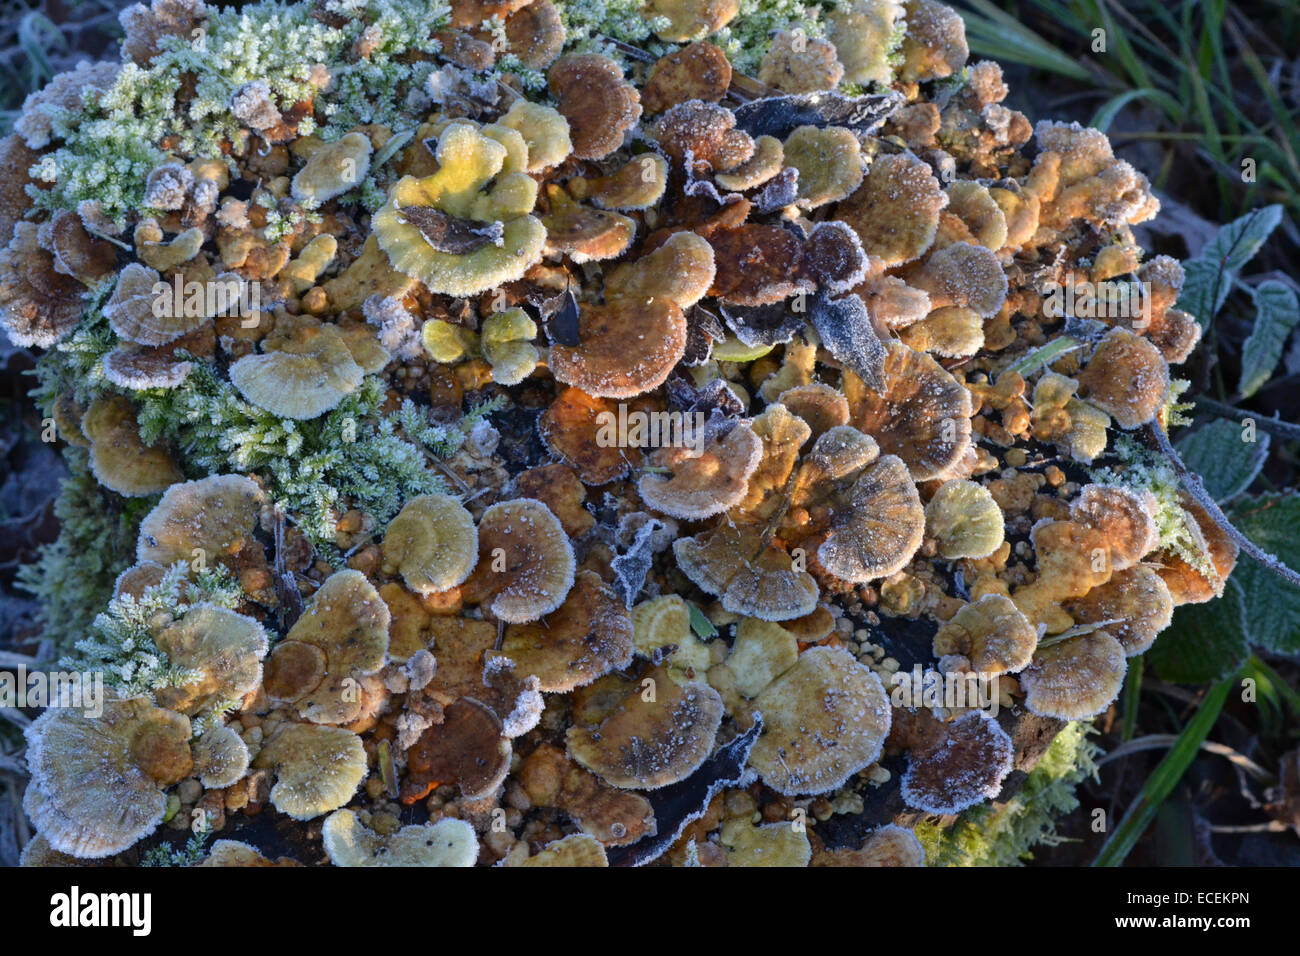 Close-up study of fungi growing on a rotting tree stump Stock Photo